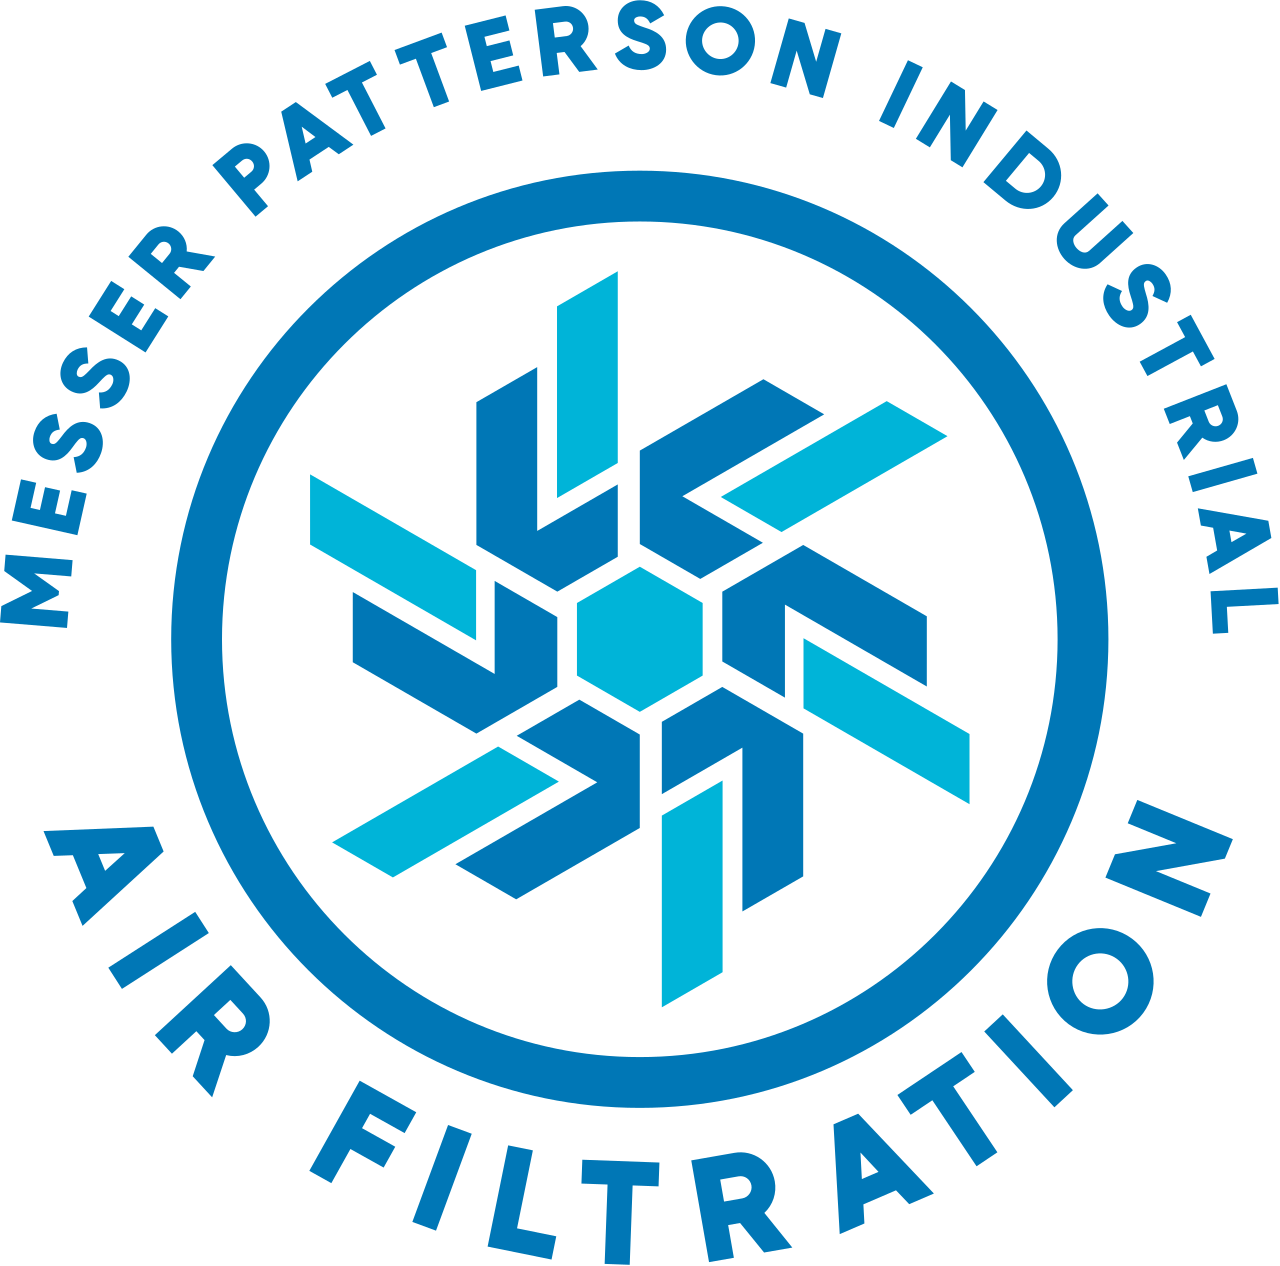 Messer Patterson Industrial's logo